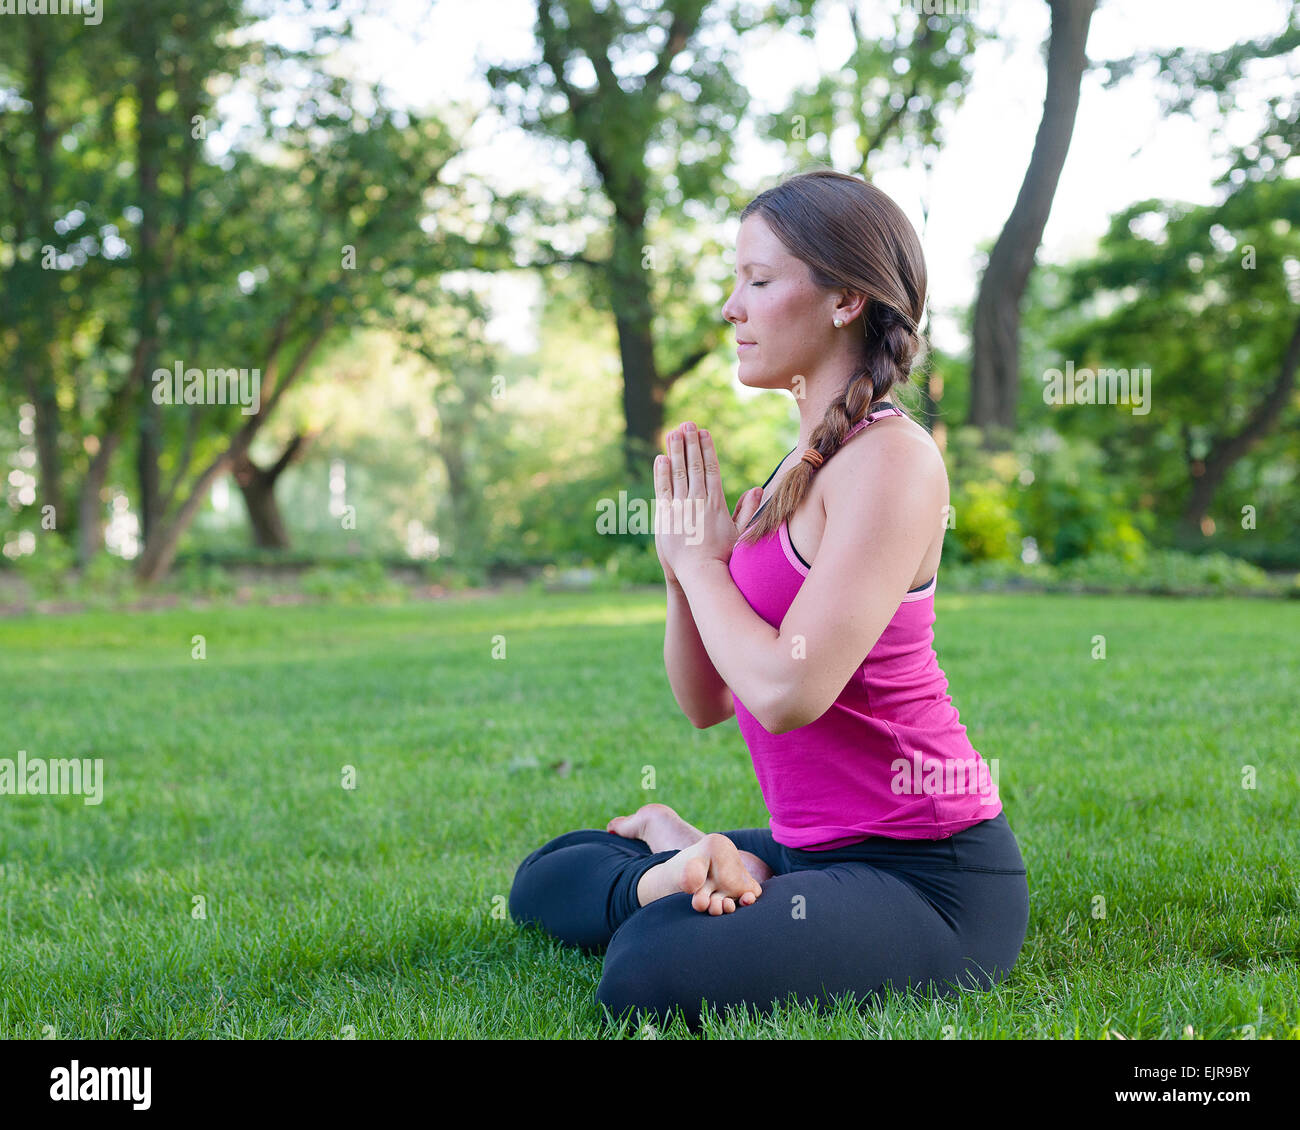 Caucasian woman meditating in park Stock Photo